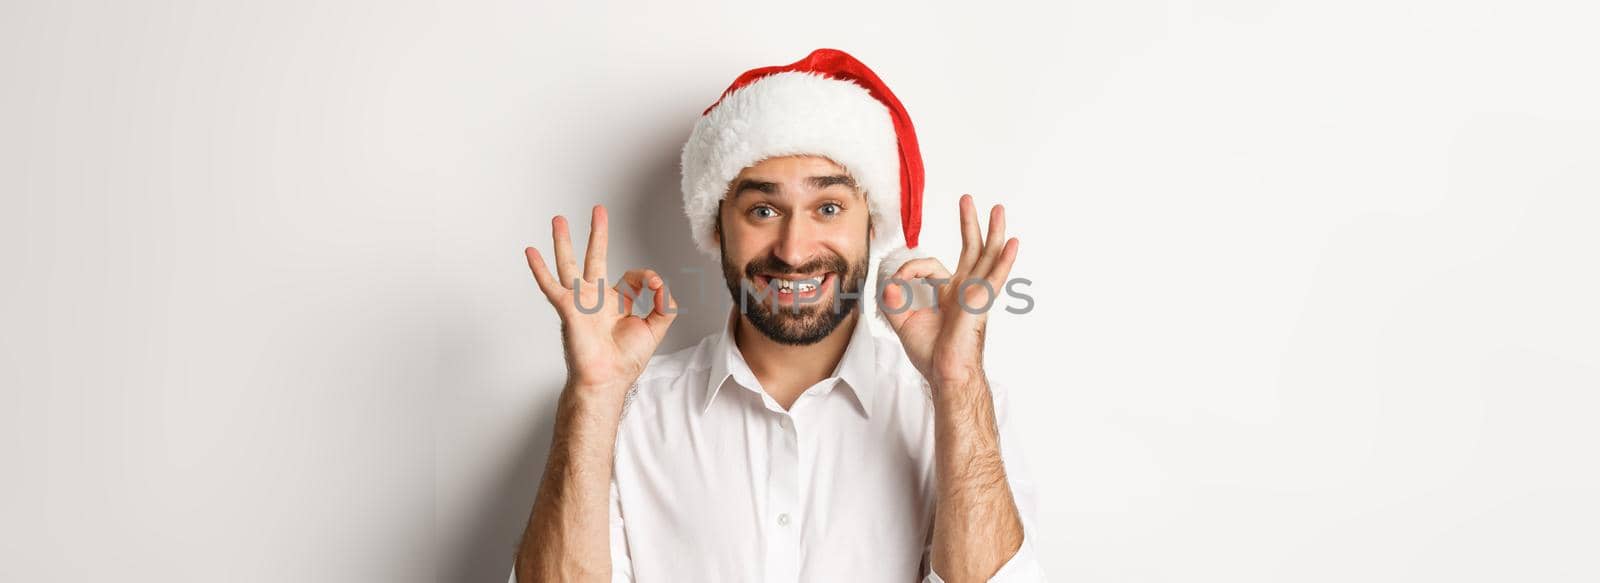 Party, winter holidays and celebration concept. Joyful man enjoying christmas and showing okay sign, smiling satisfied, wearing santa hat, white background.